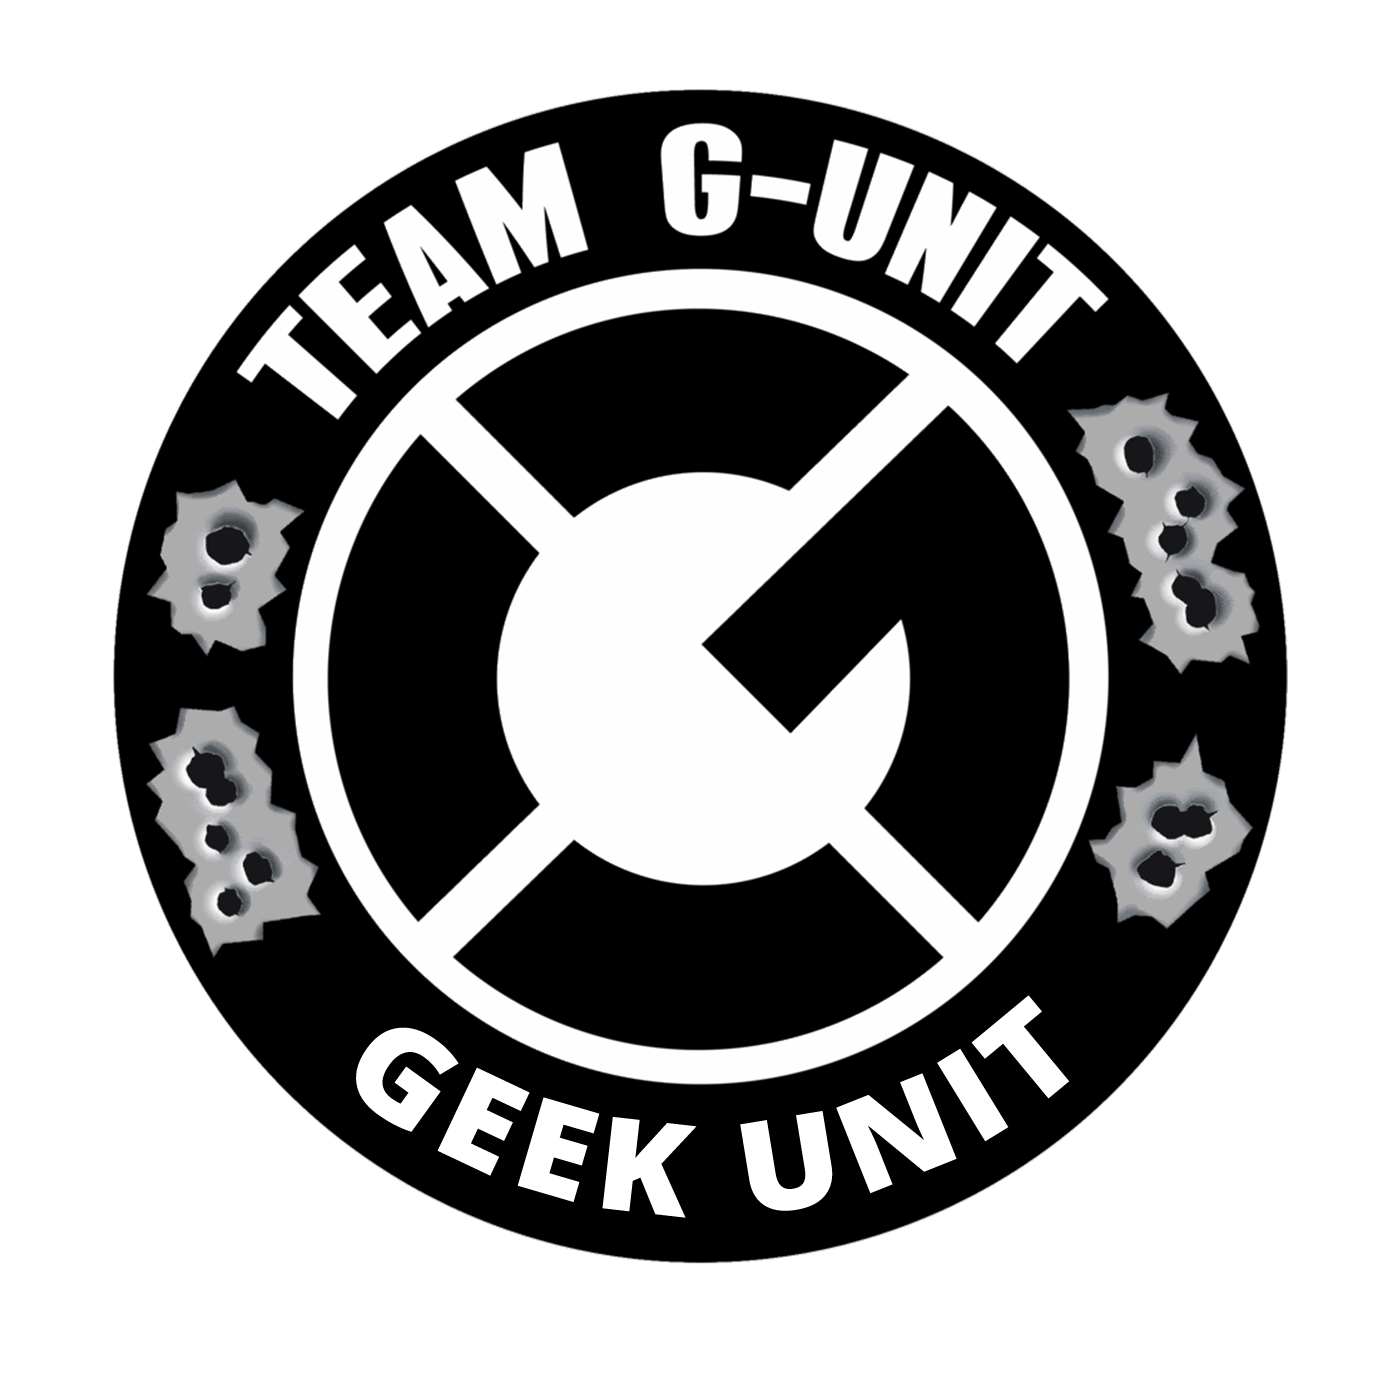 G-Unit-Logo – Cleeton Gumbs